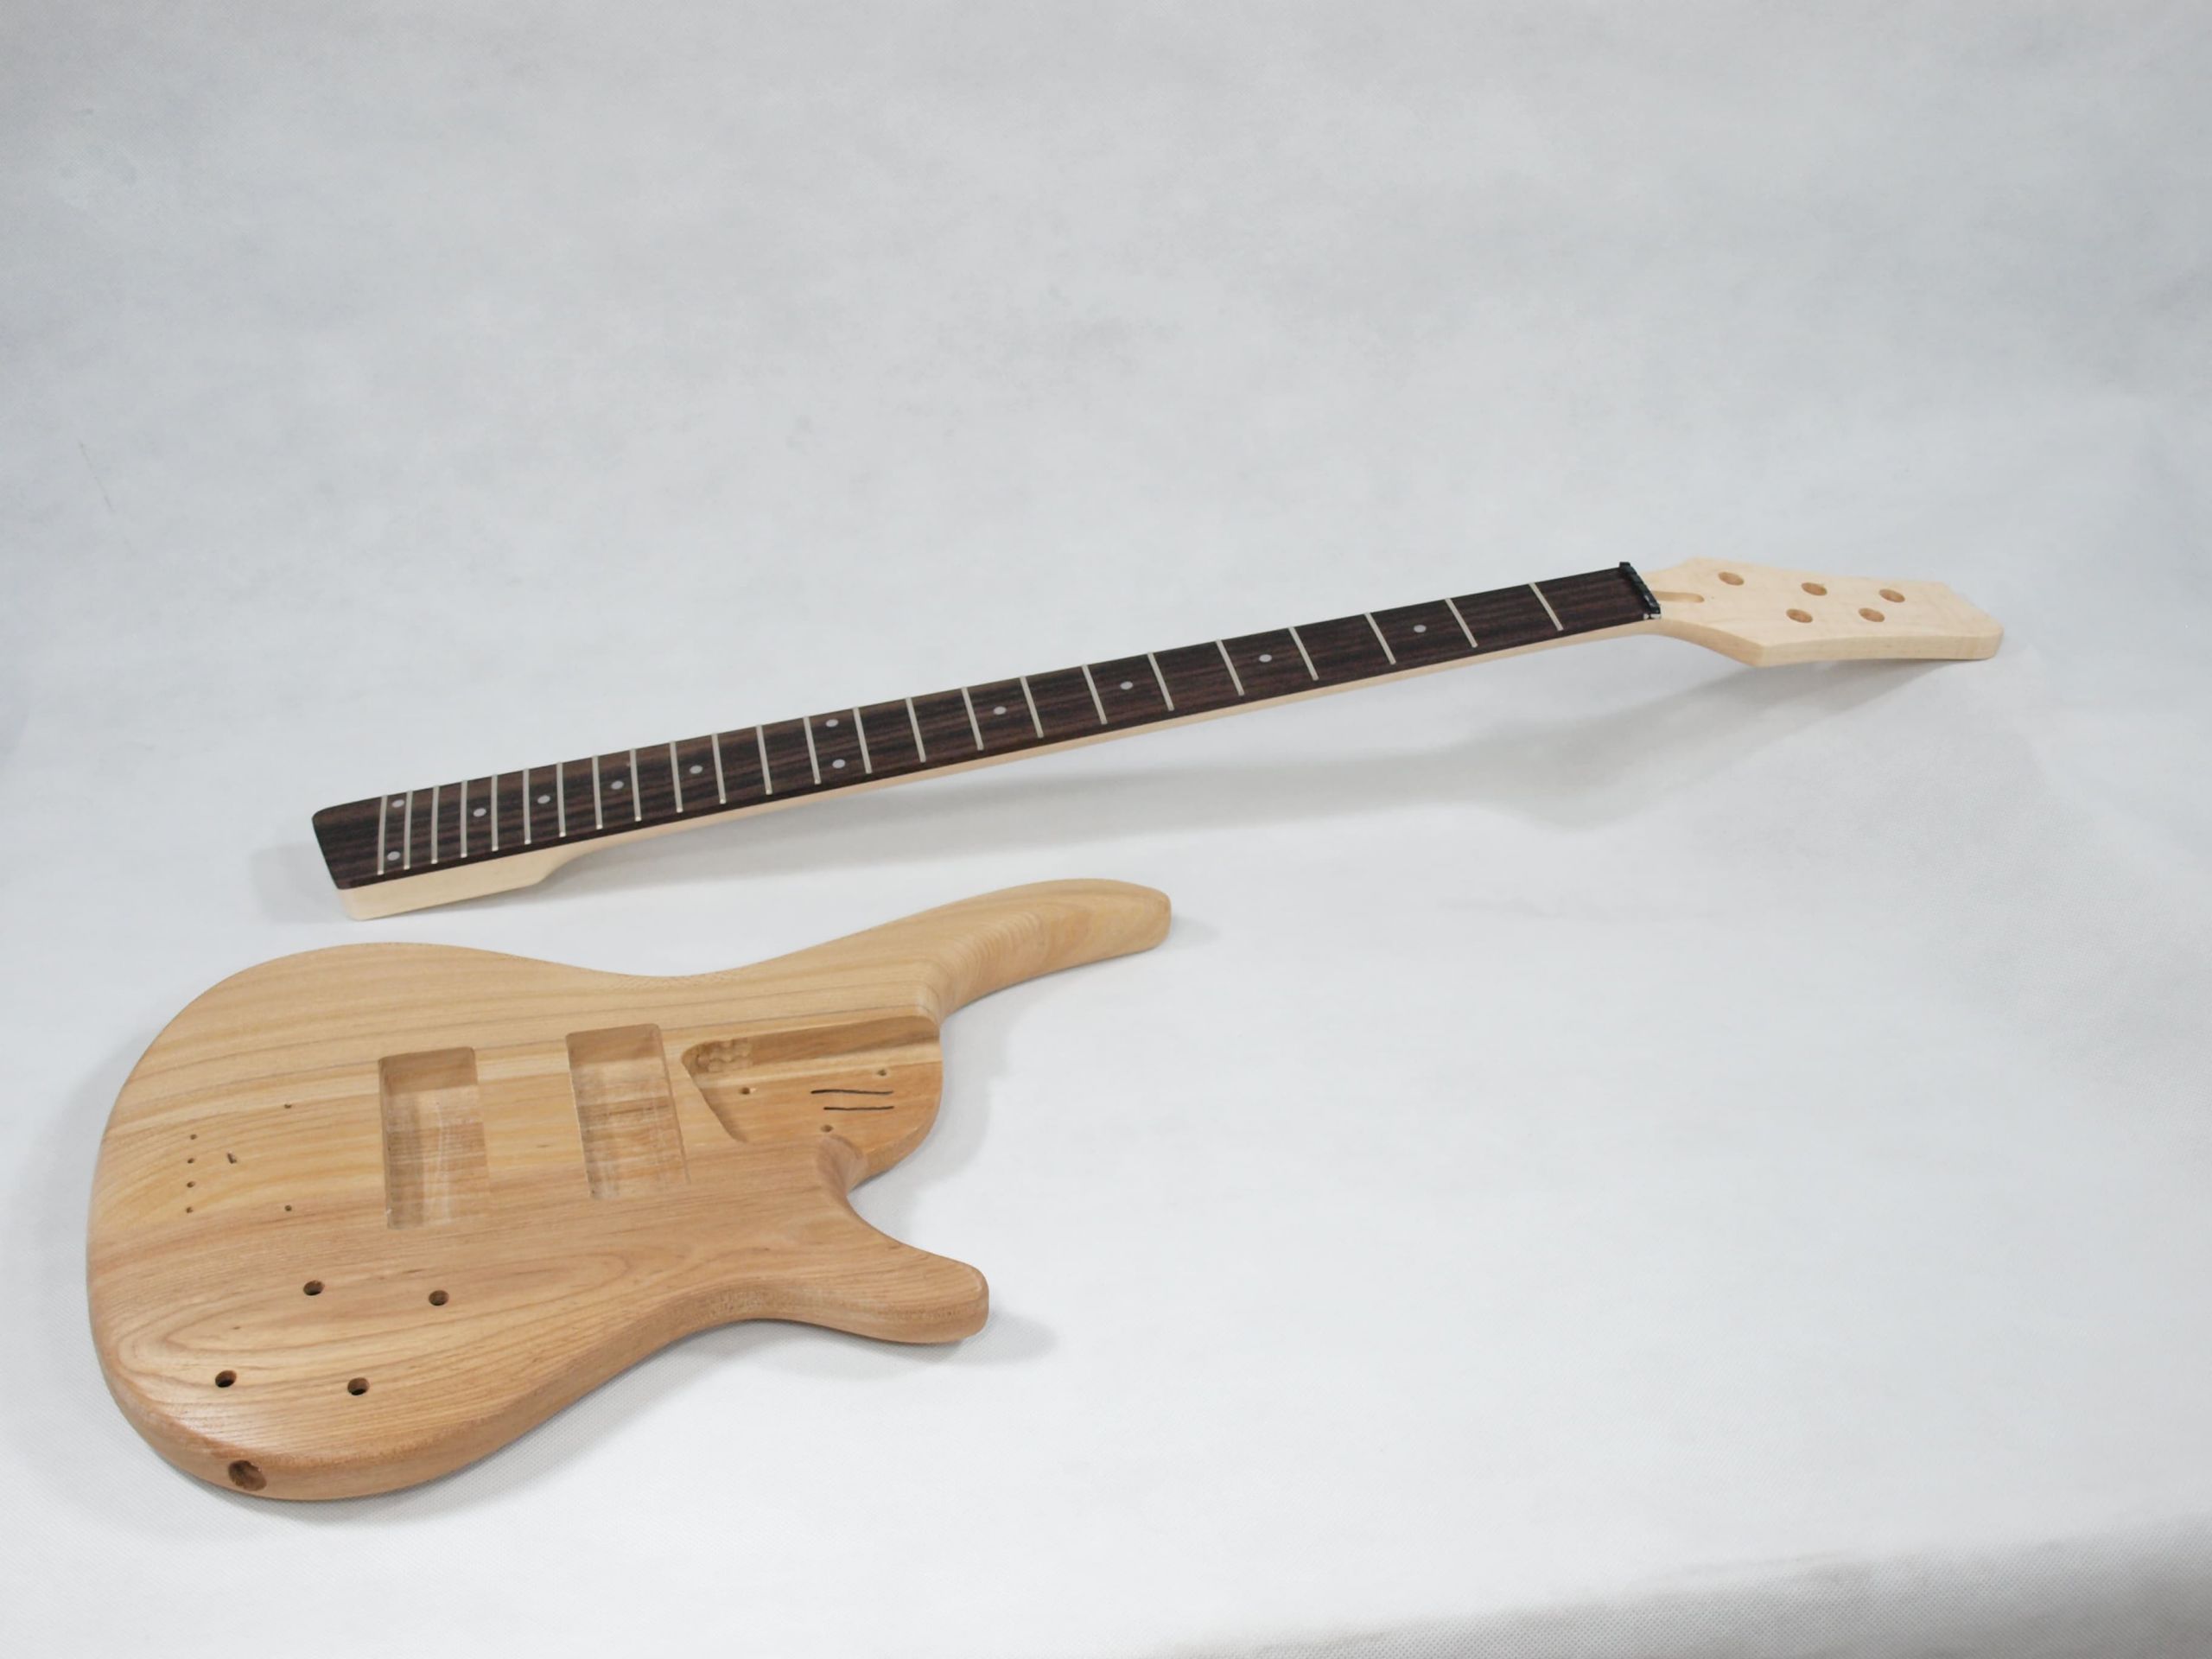 DIY Bass Guitar Kits
 Solo SRBK 15 DIY 5 String Electric Bass Guitar Kit